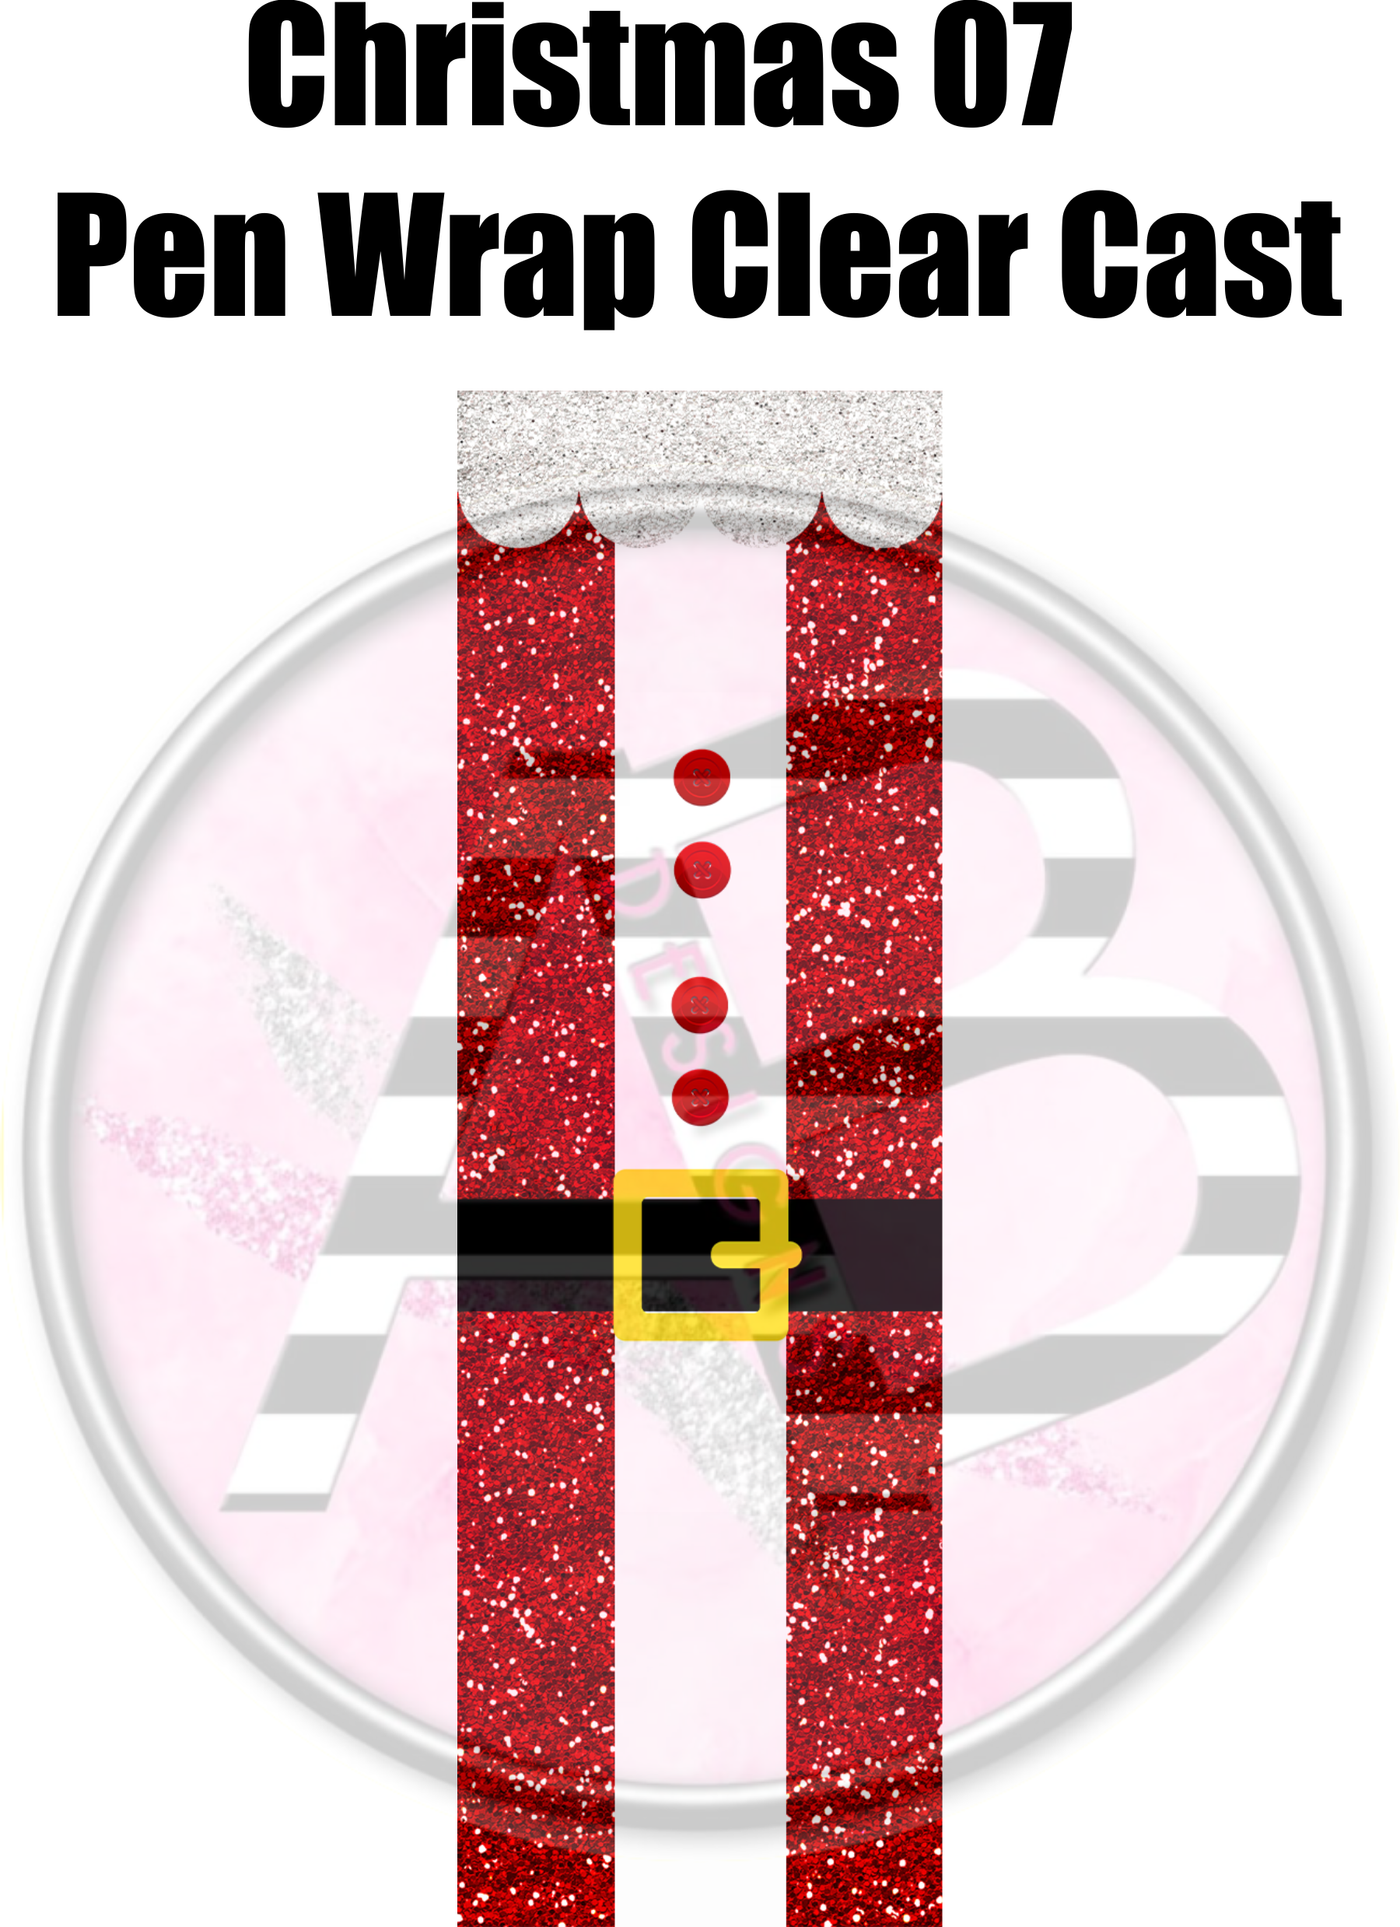 Christmas 07 - Pen Wrap Clear Cast Decal